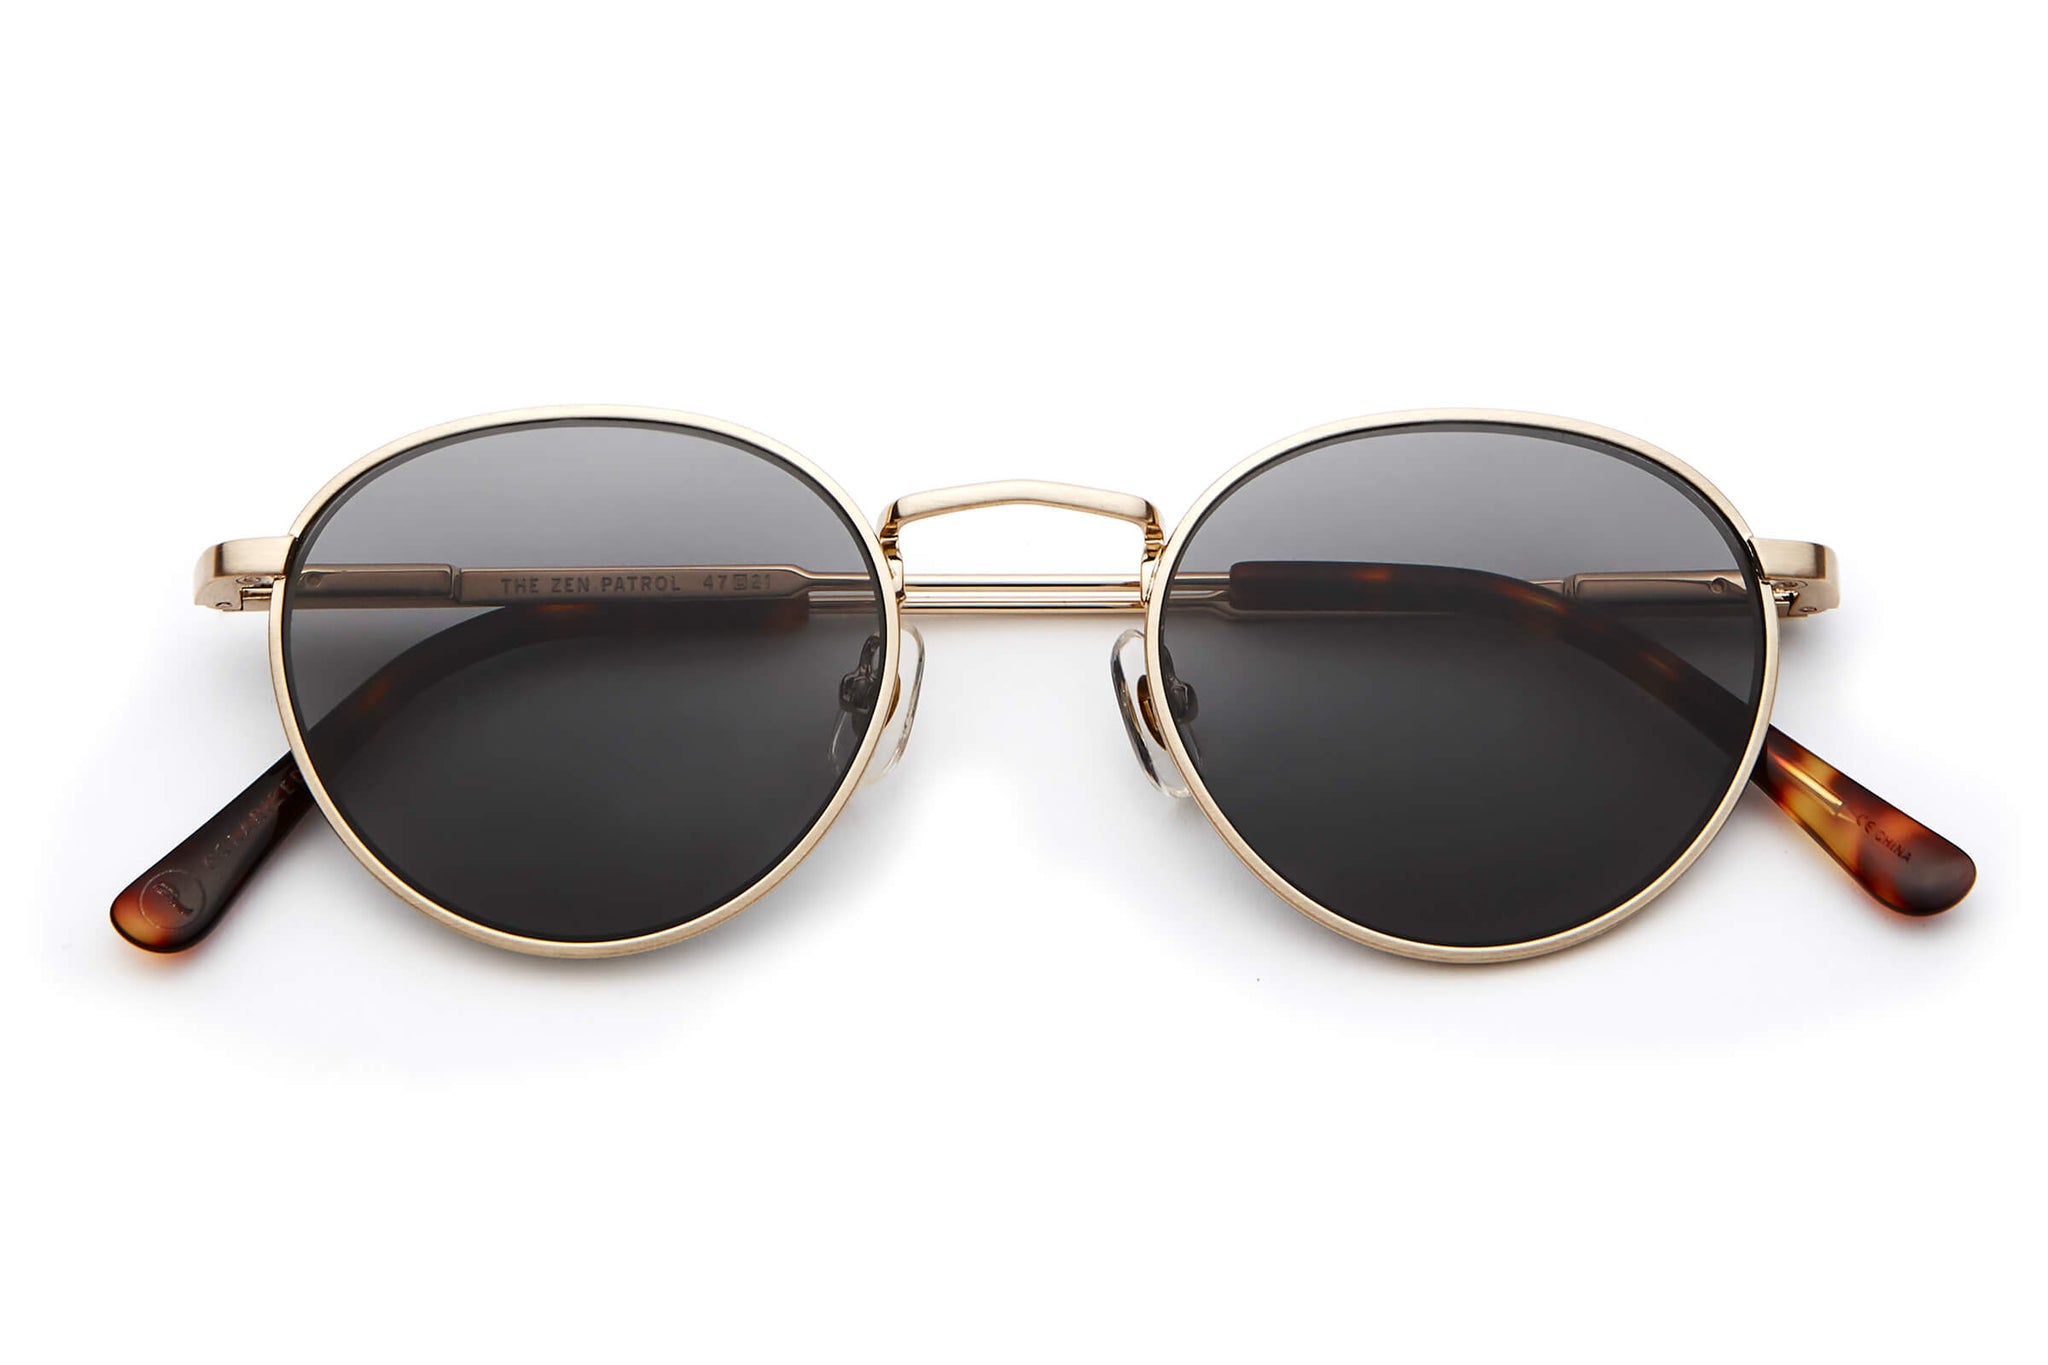 90s style men's sunglasses - GlassesUSA.com blog